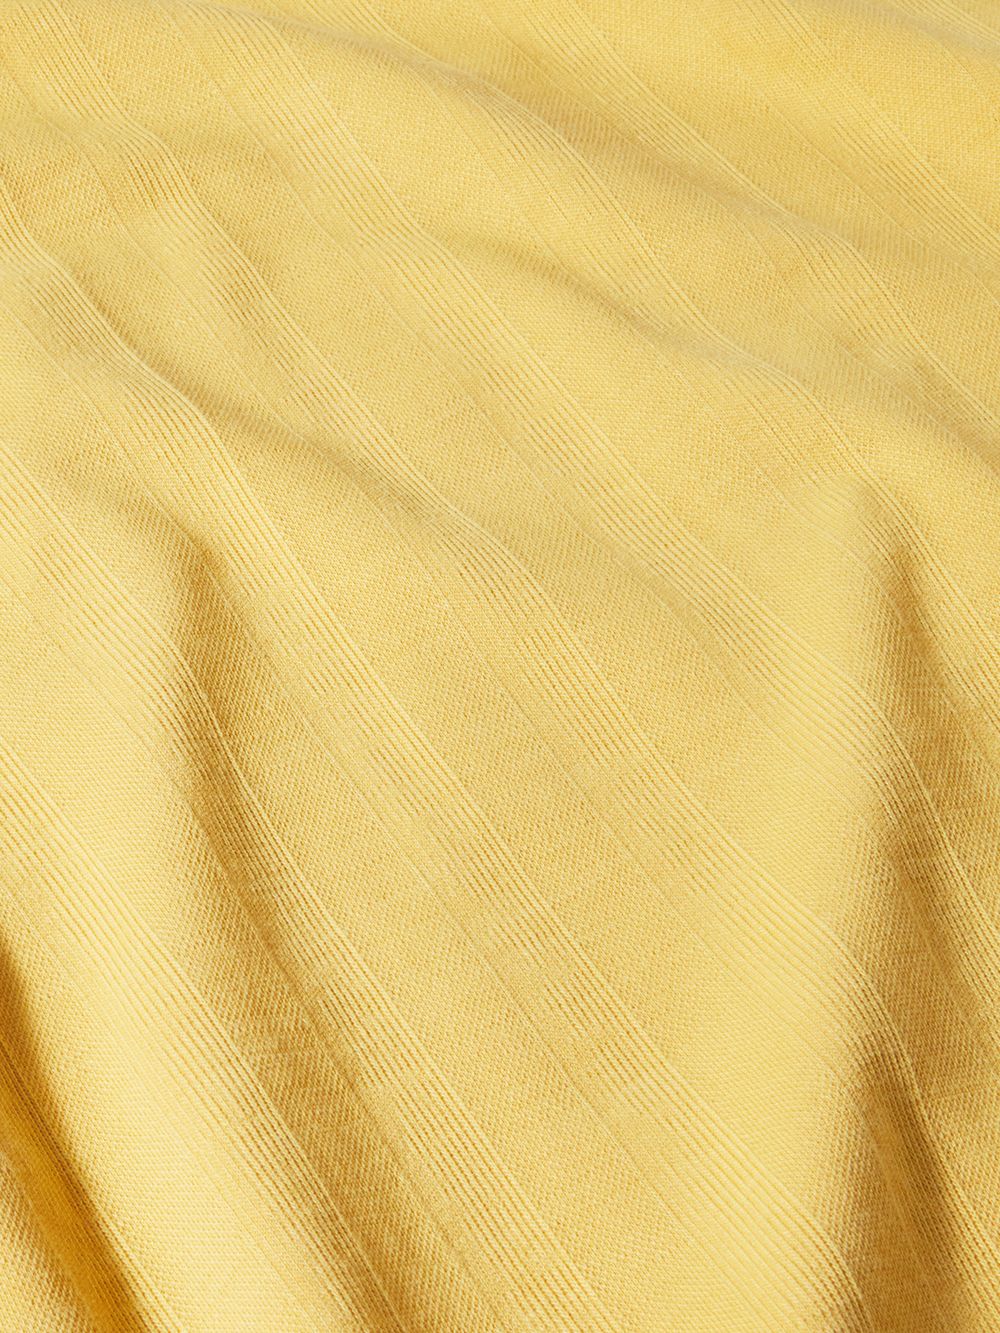 Mustard Textured Plain Slim Fit Polo T-Shirt